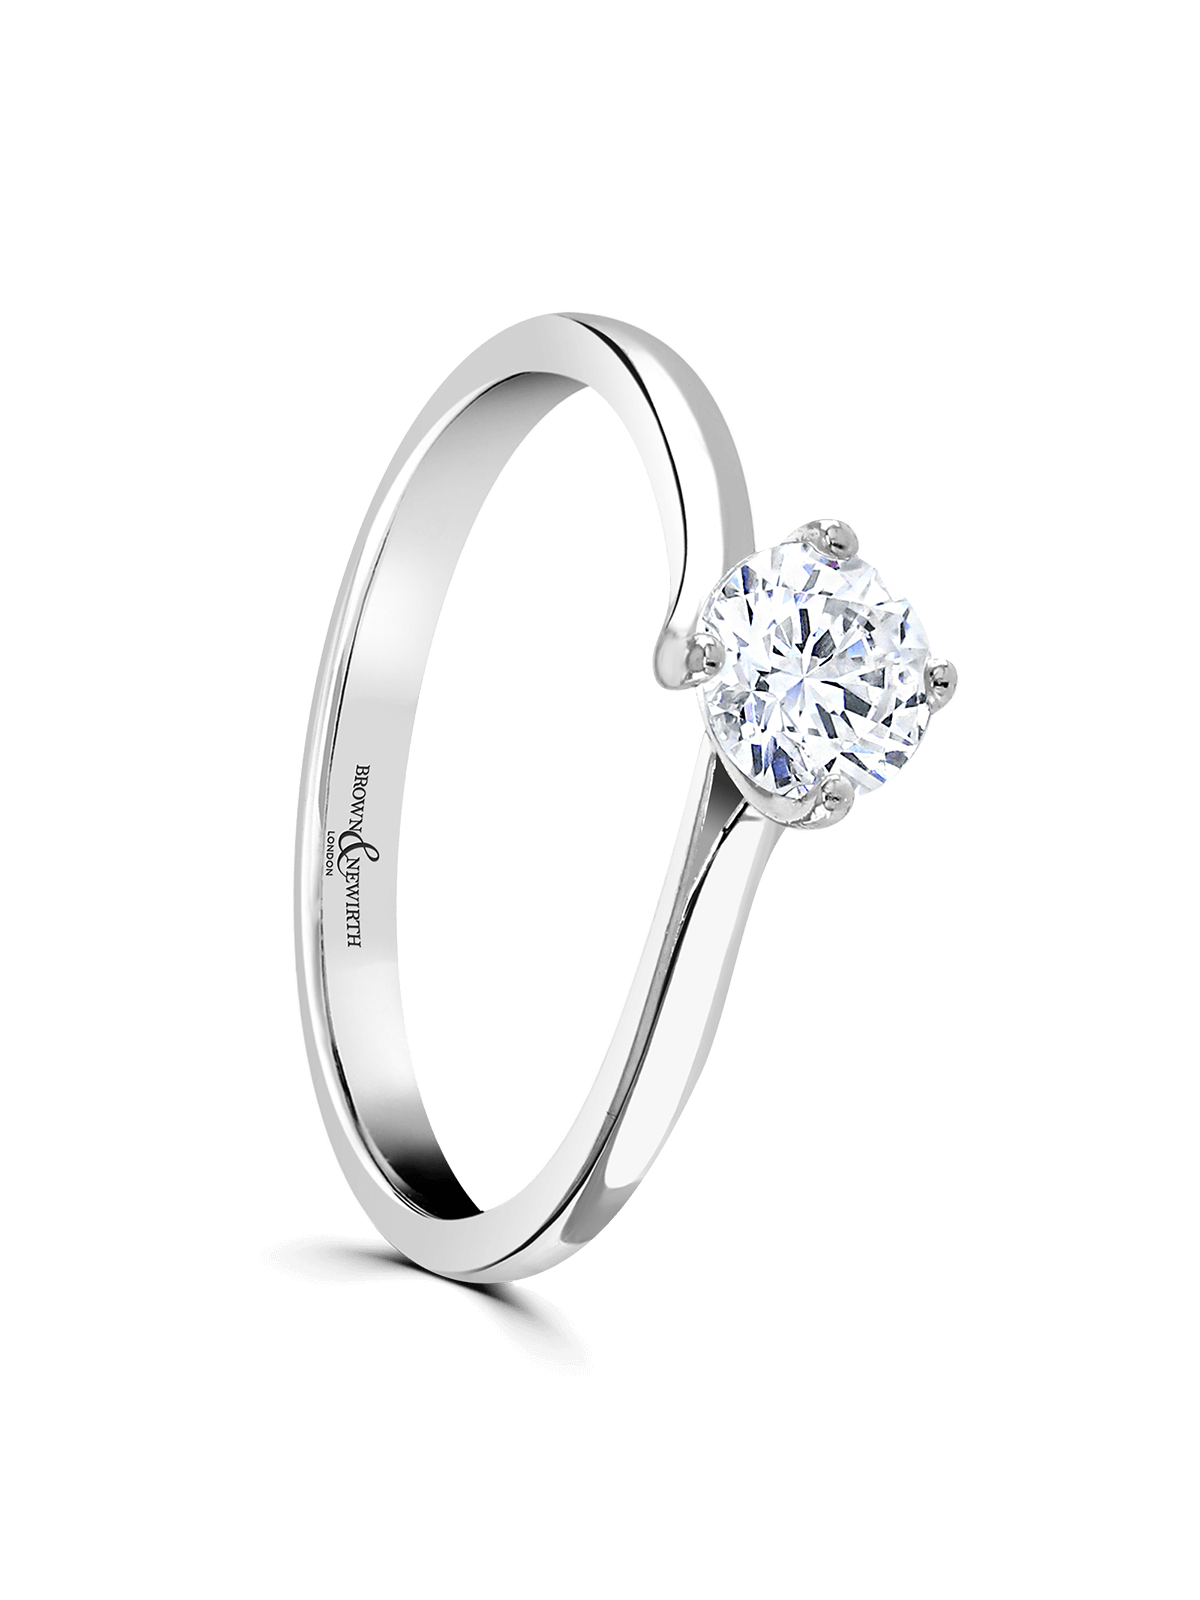 Brown & Newirth Evoke 0.70ct Brilliant Cut Certificated Diamond Solitaire Engagement Ring in Platinum